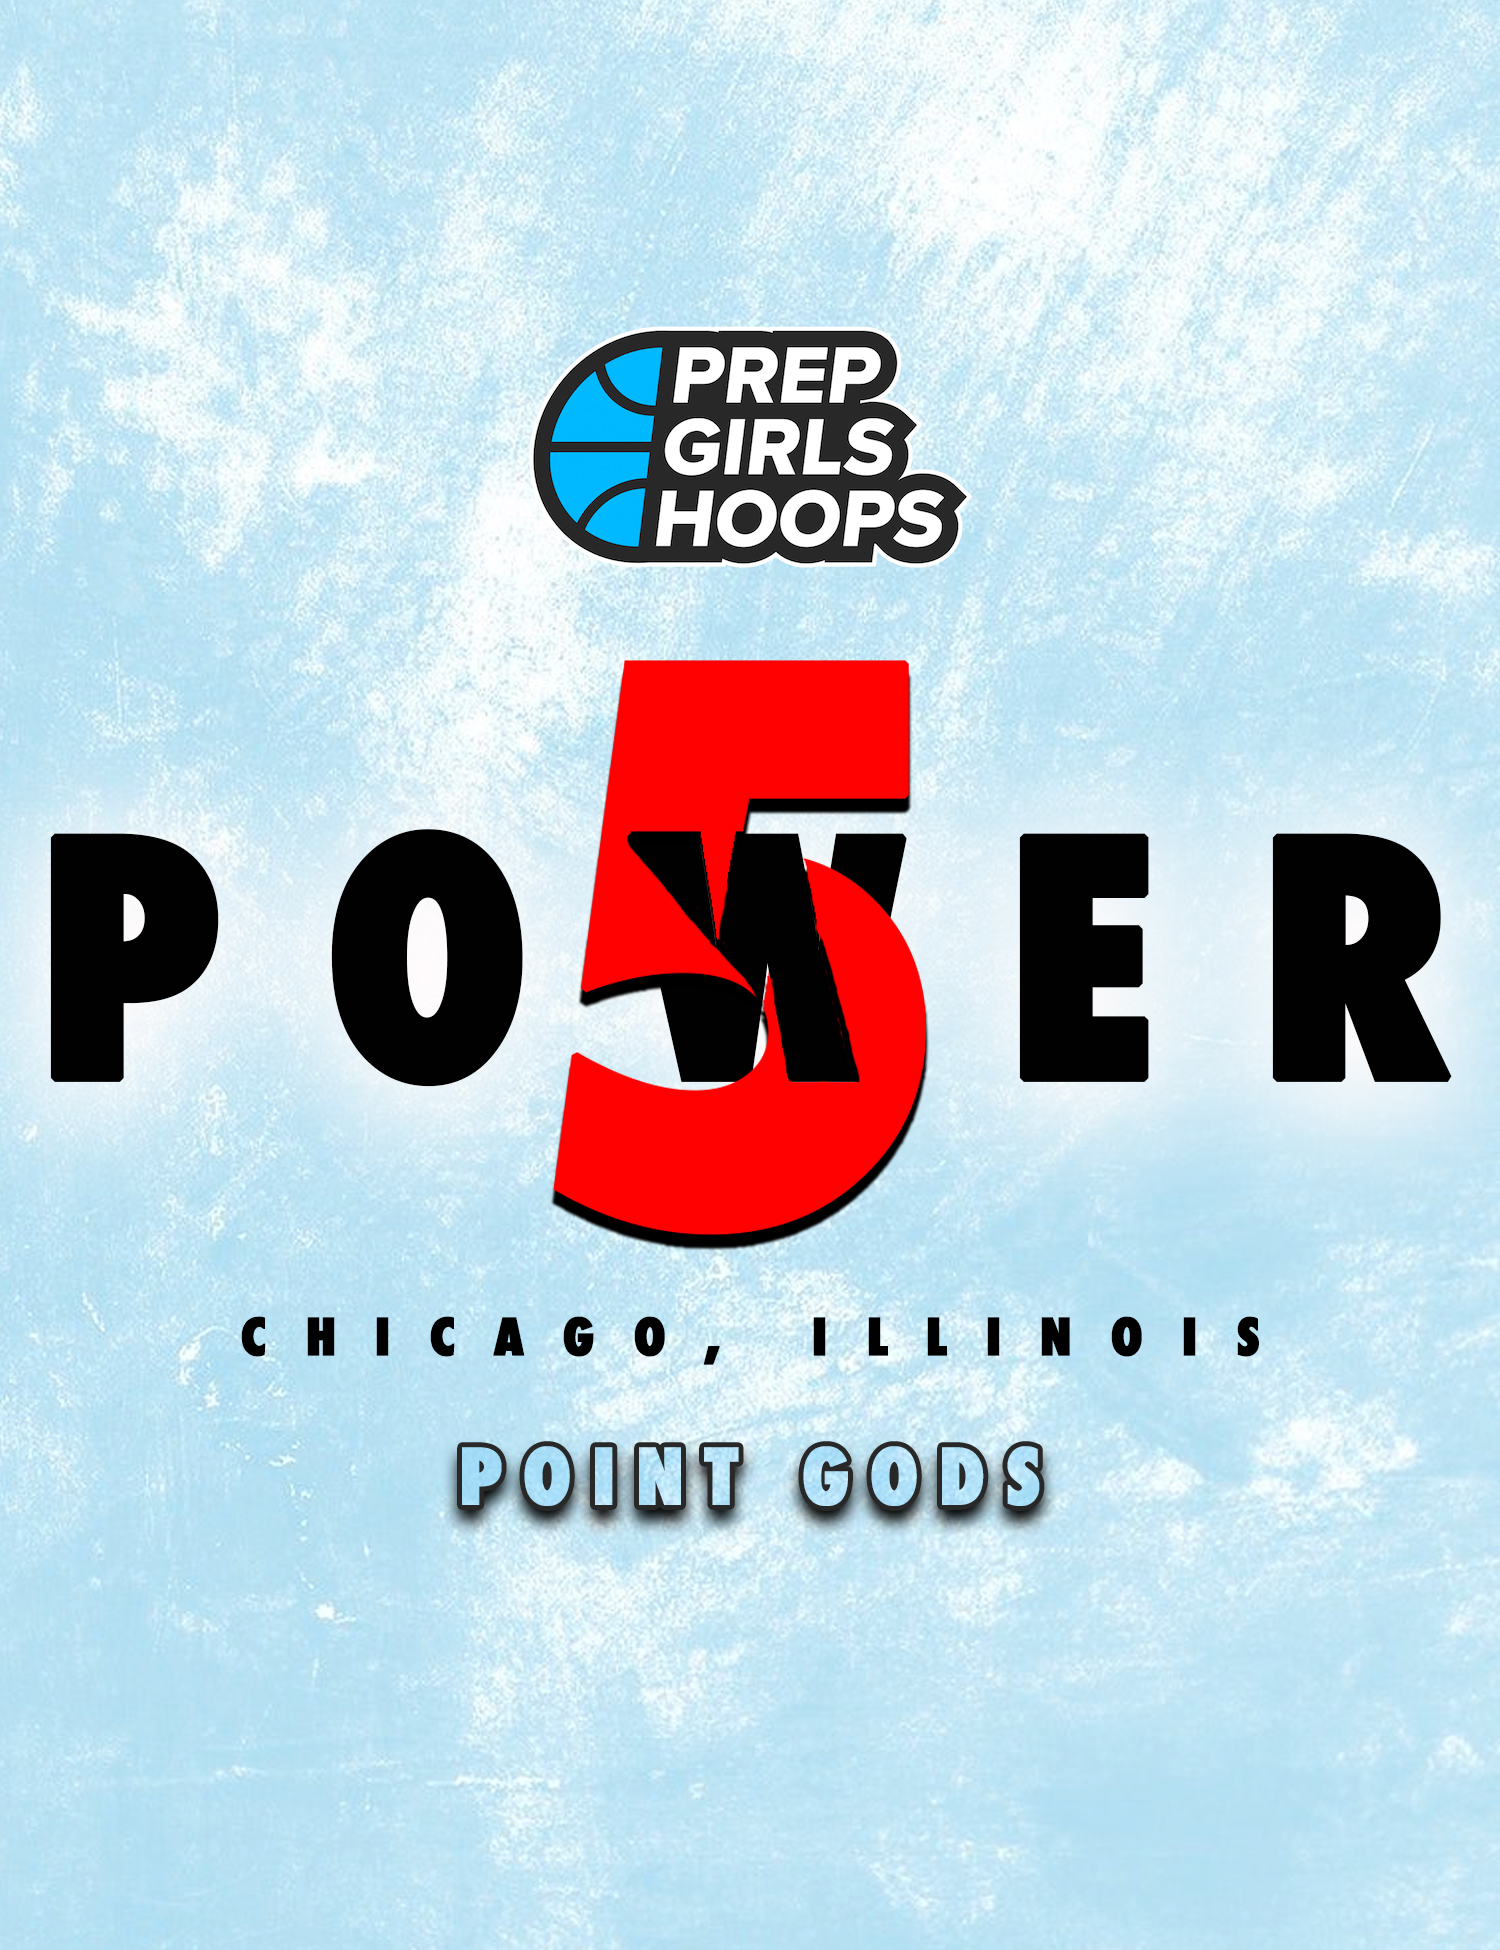 Nike Chicago TOC Power 5 Point Gods Prep Girls Hoops